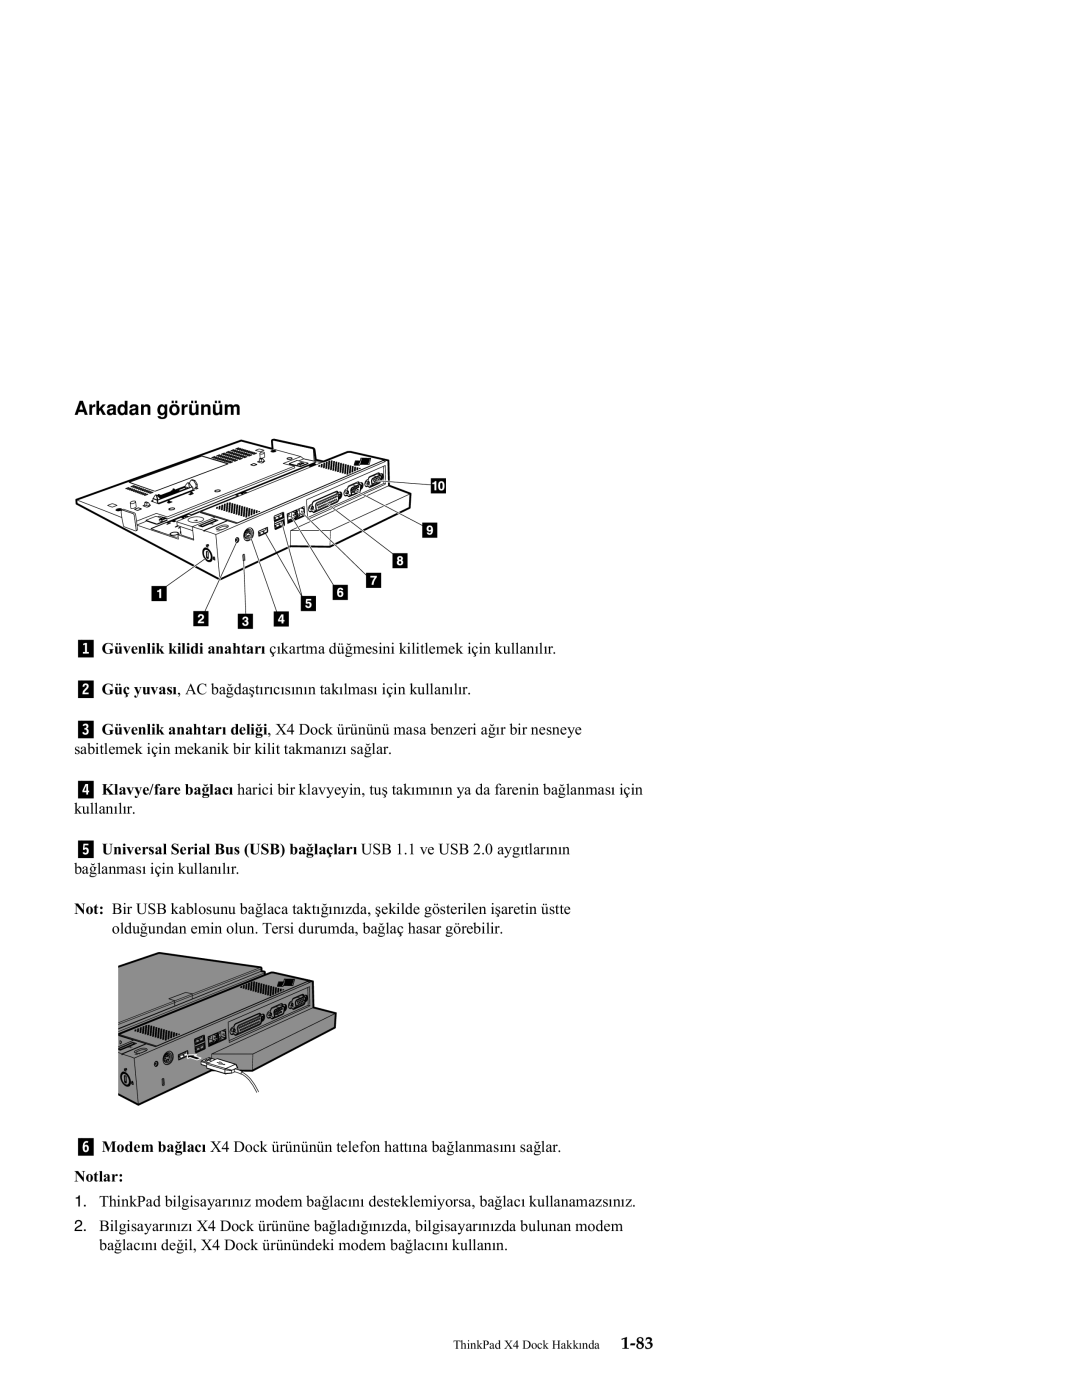 IBM X4 manual Arkadan görünüm, Notlar 